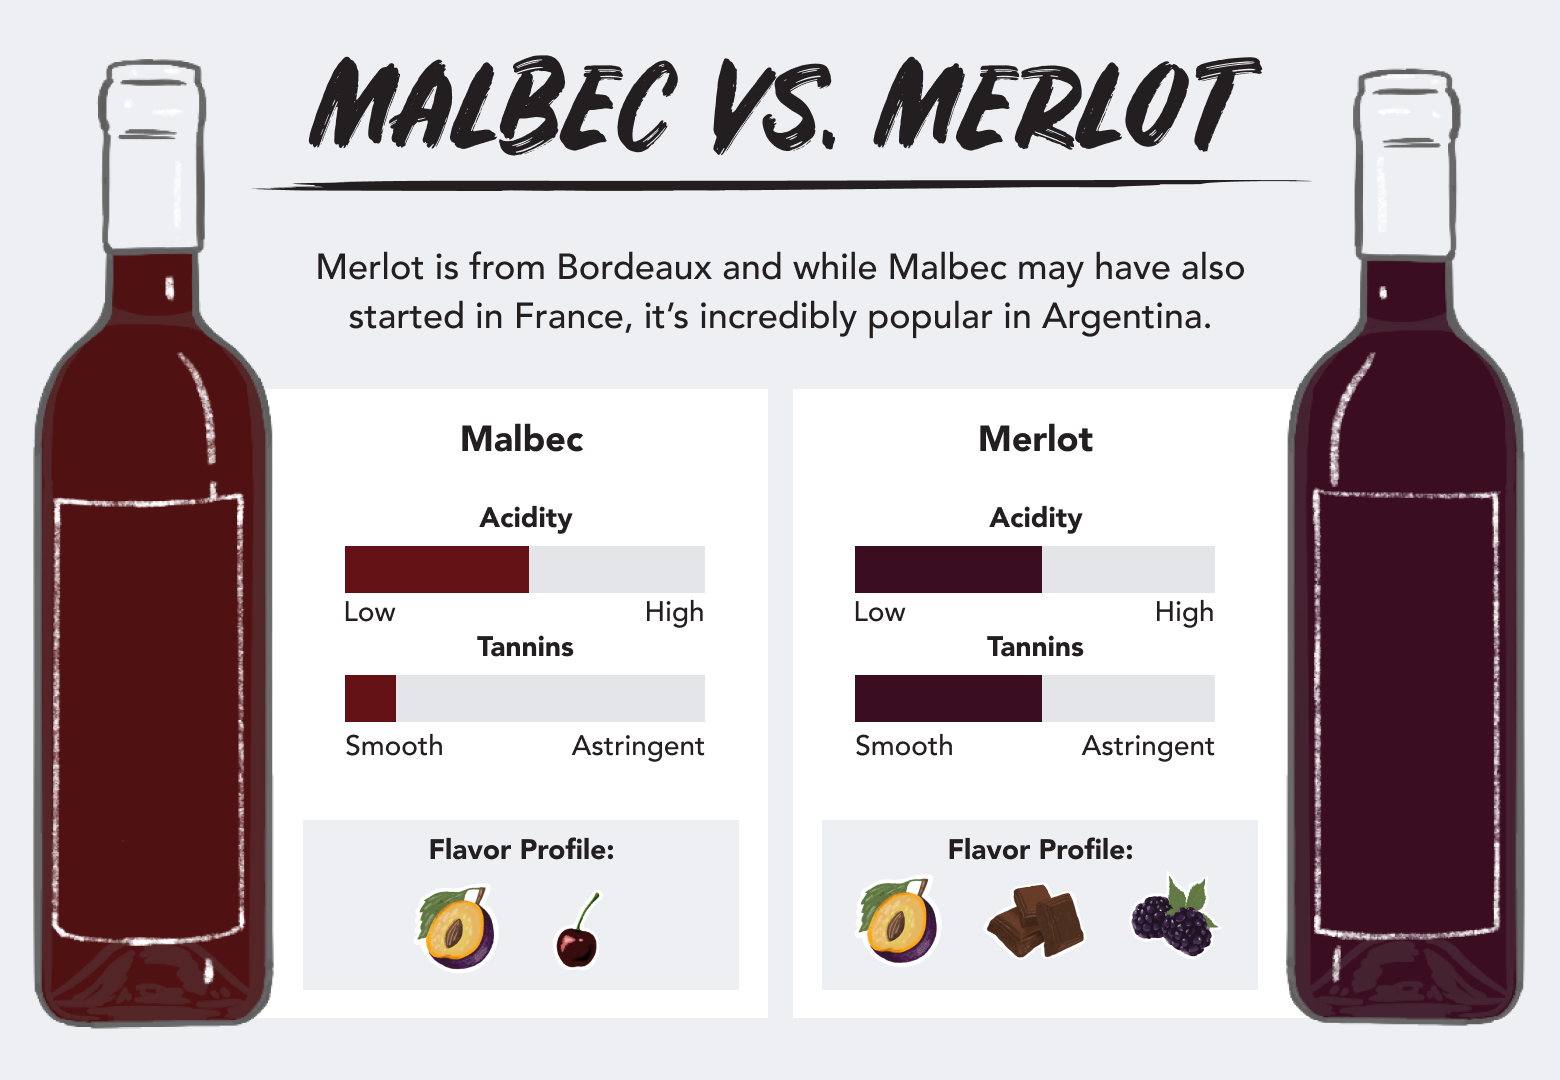 Malbec vs. Merlot